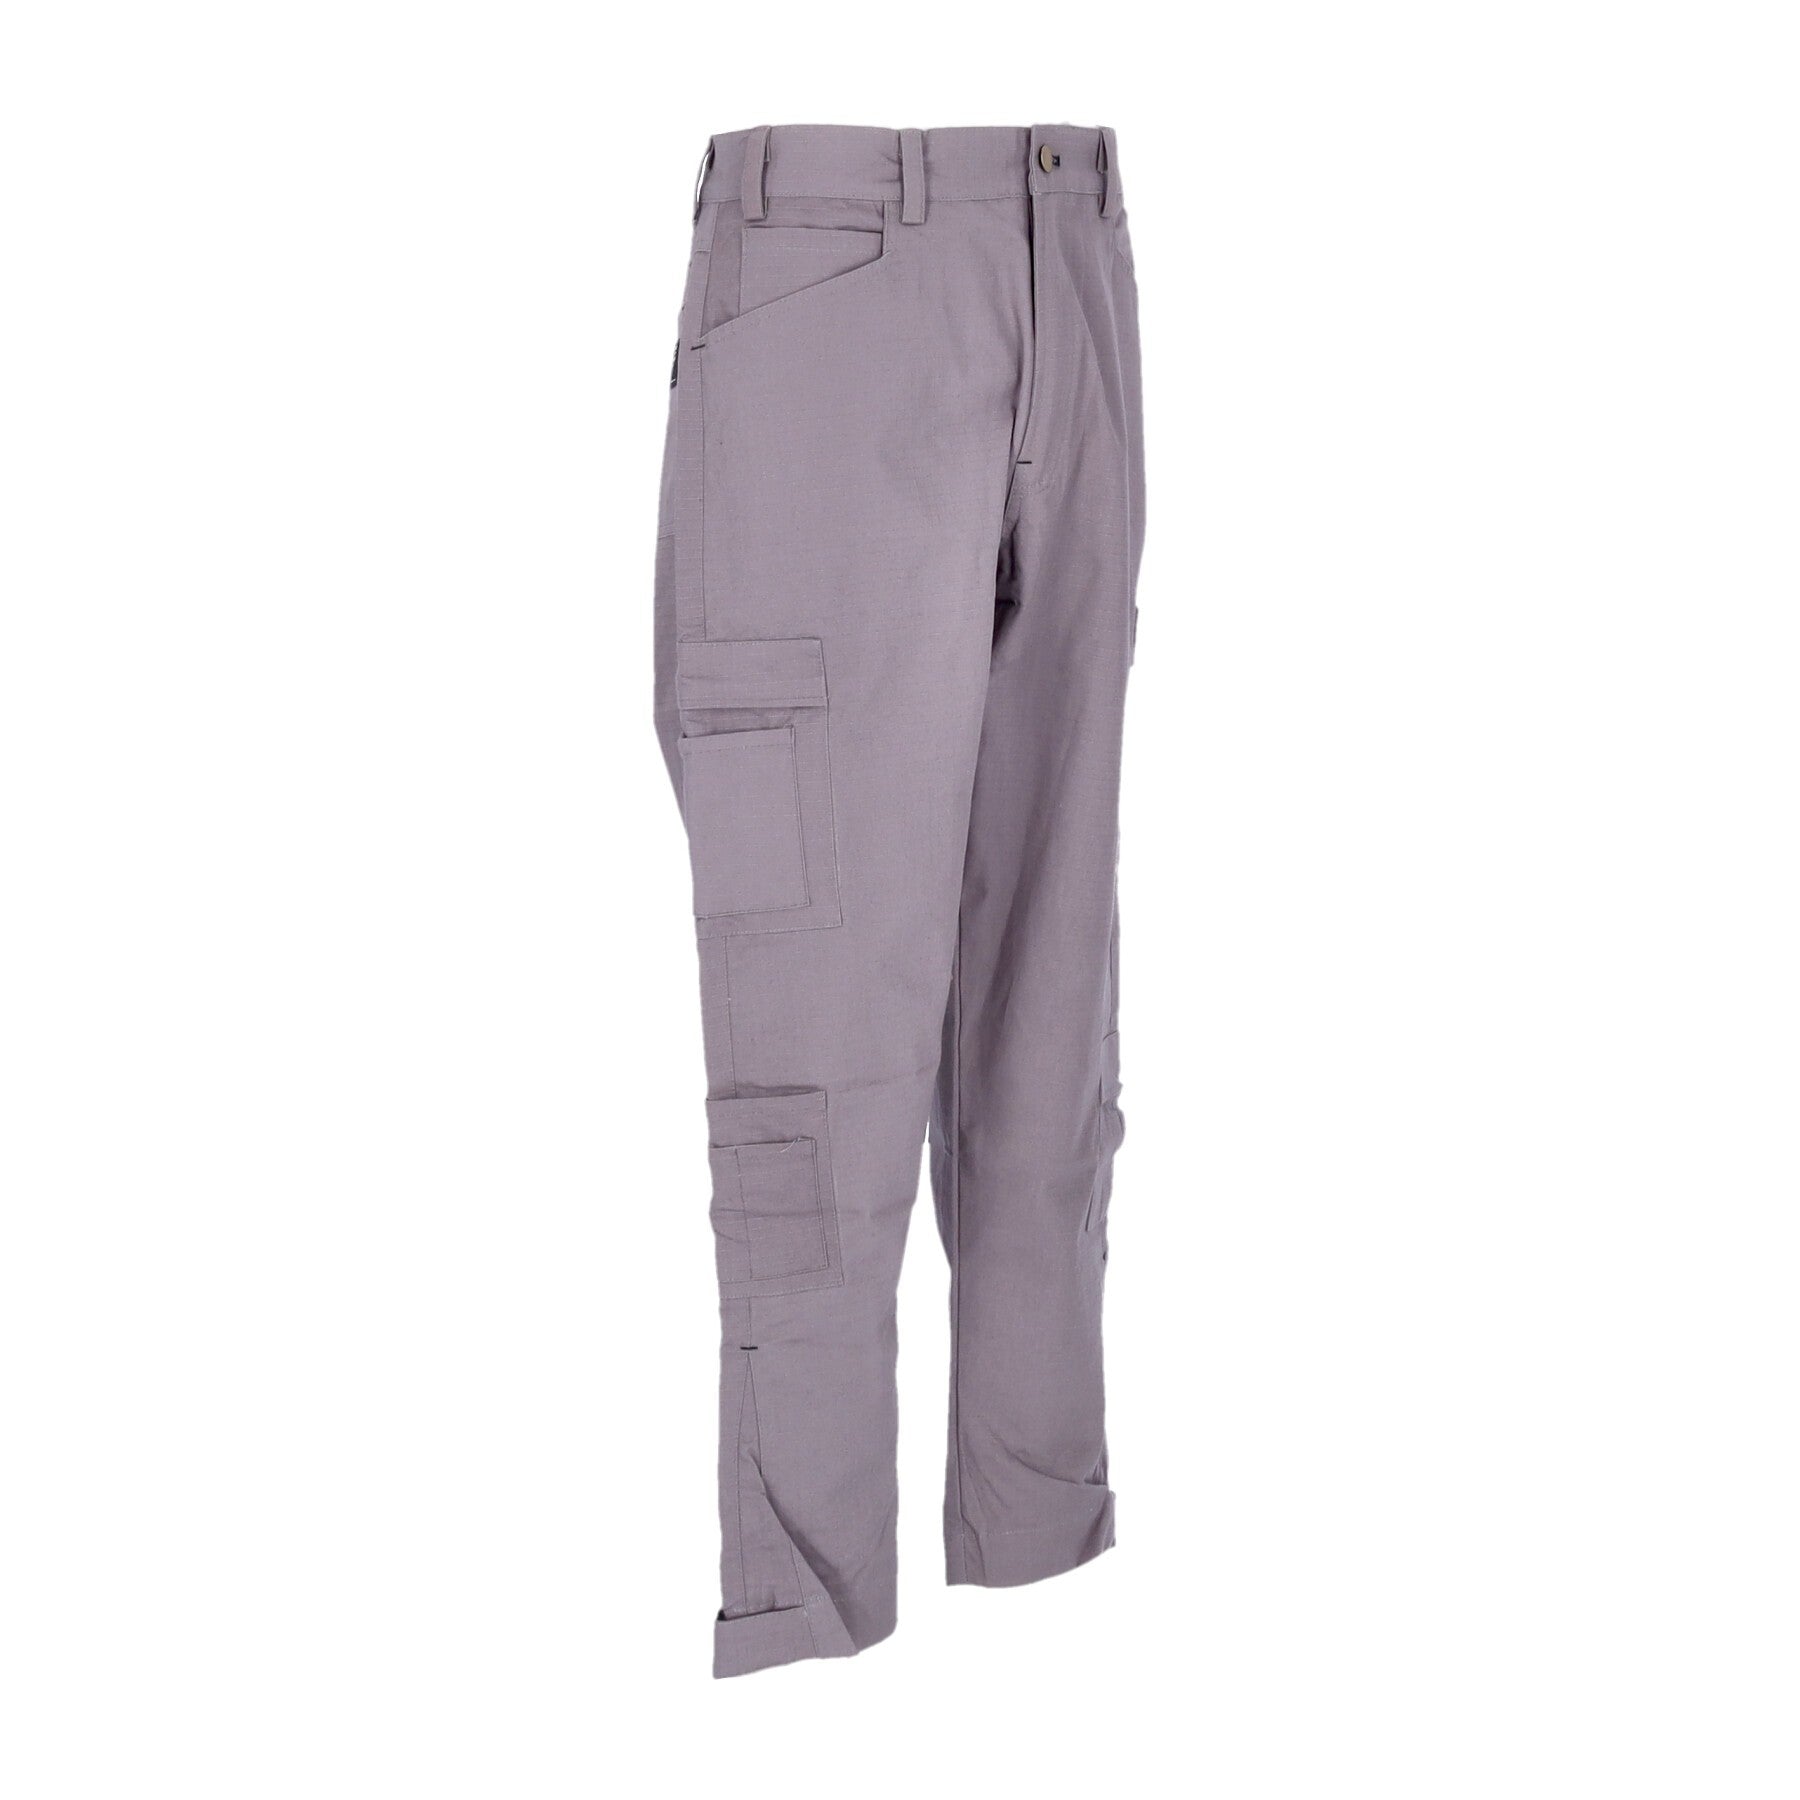 Retrofuture Combat Pants Men's Long Pants Grey